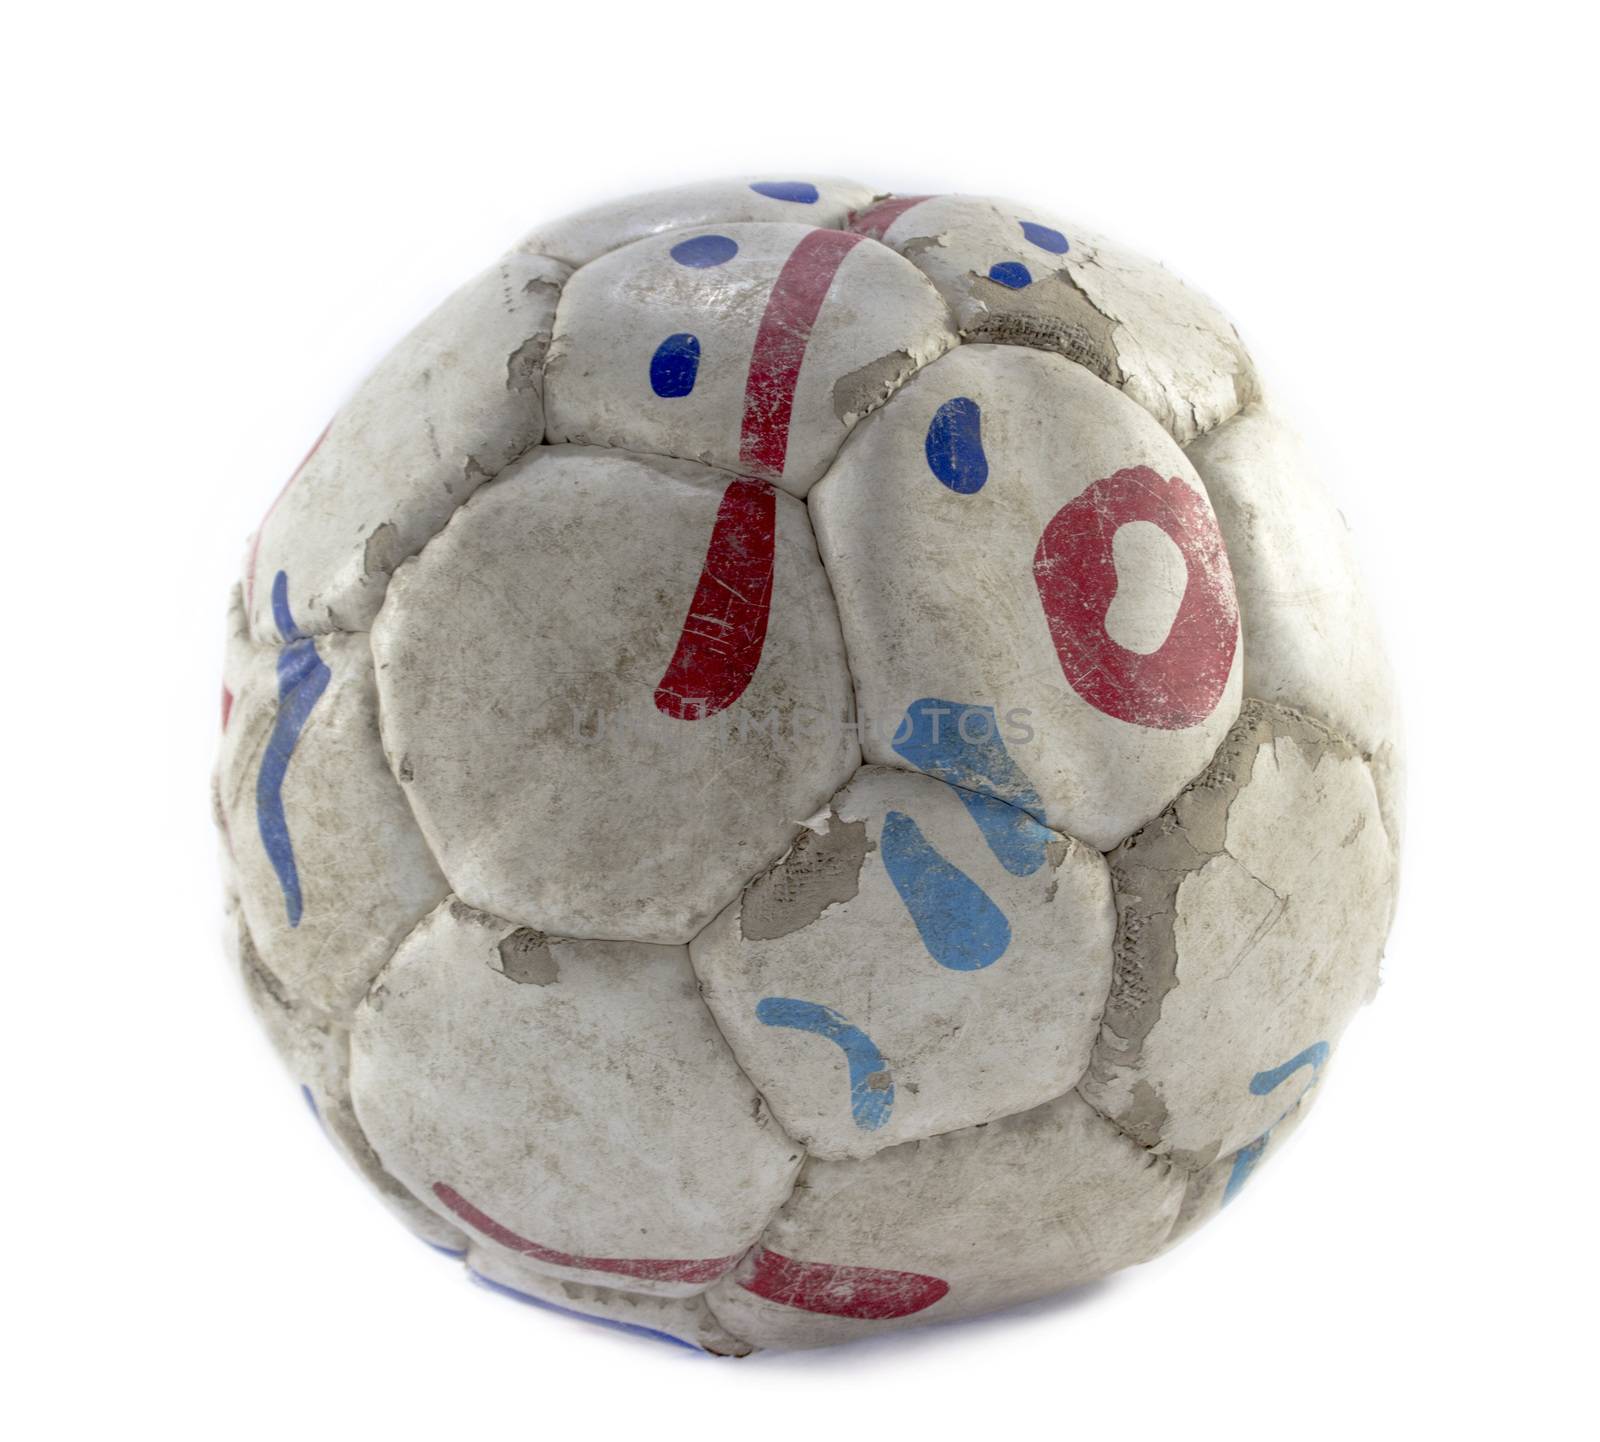 Grunge football or soccer ball on white background.